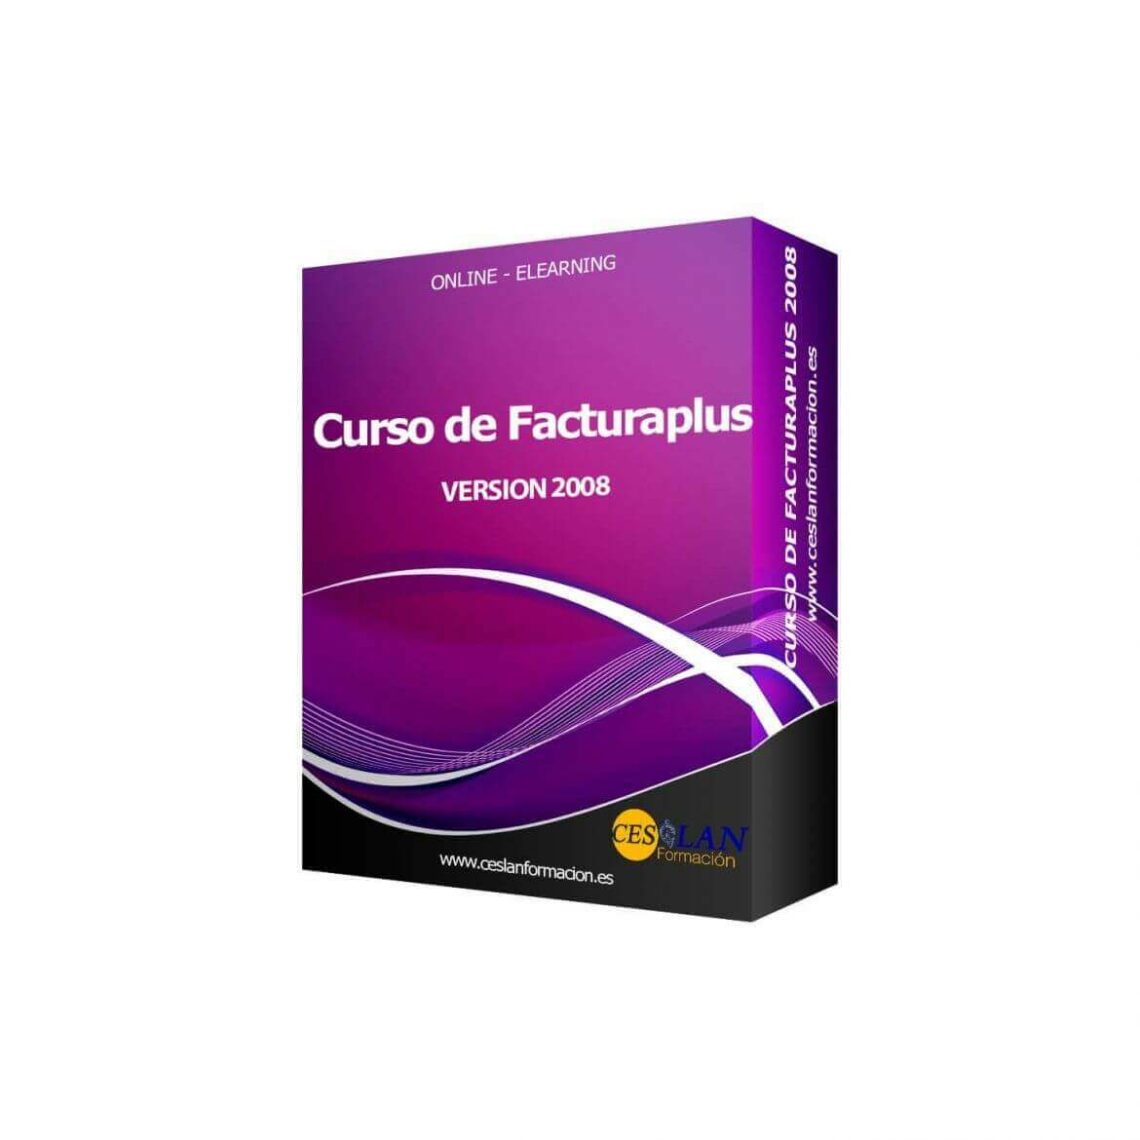 Cuso de Facturaplus 2008